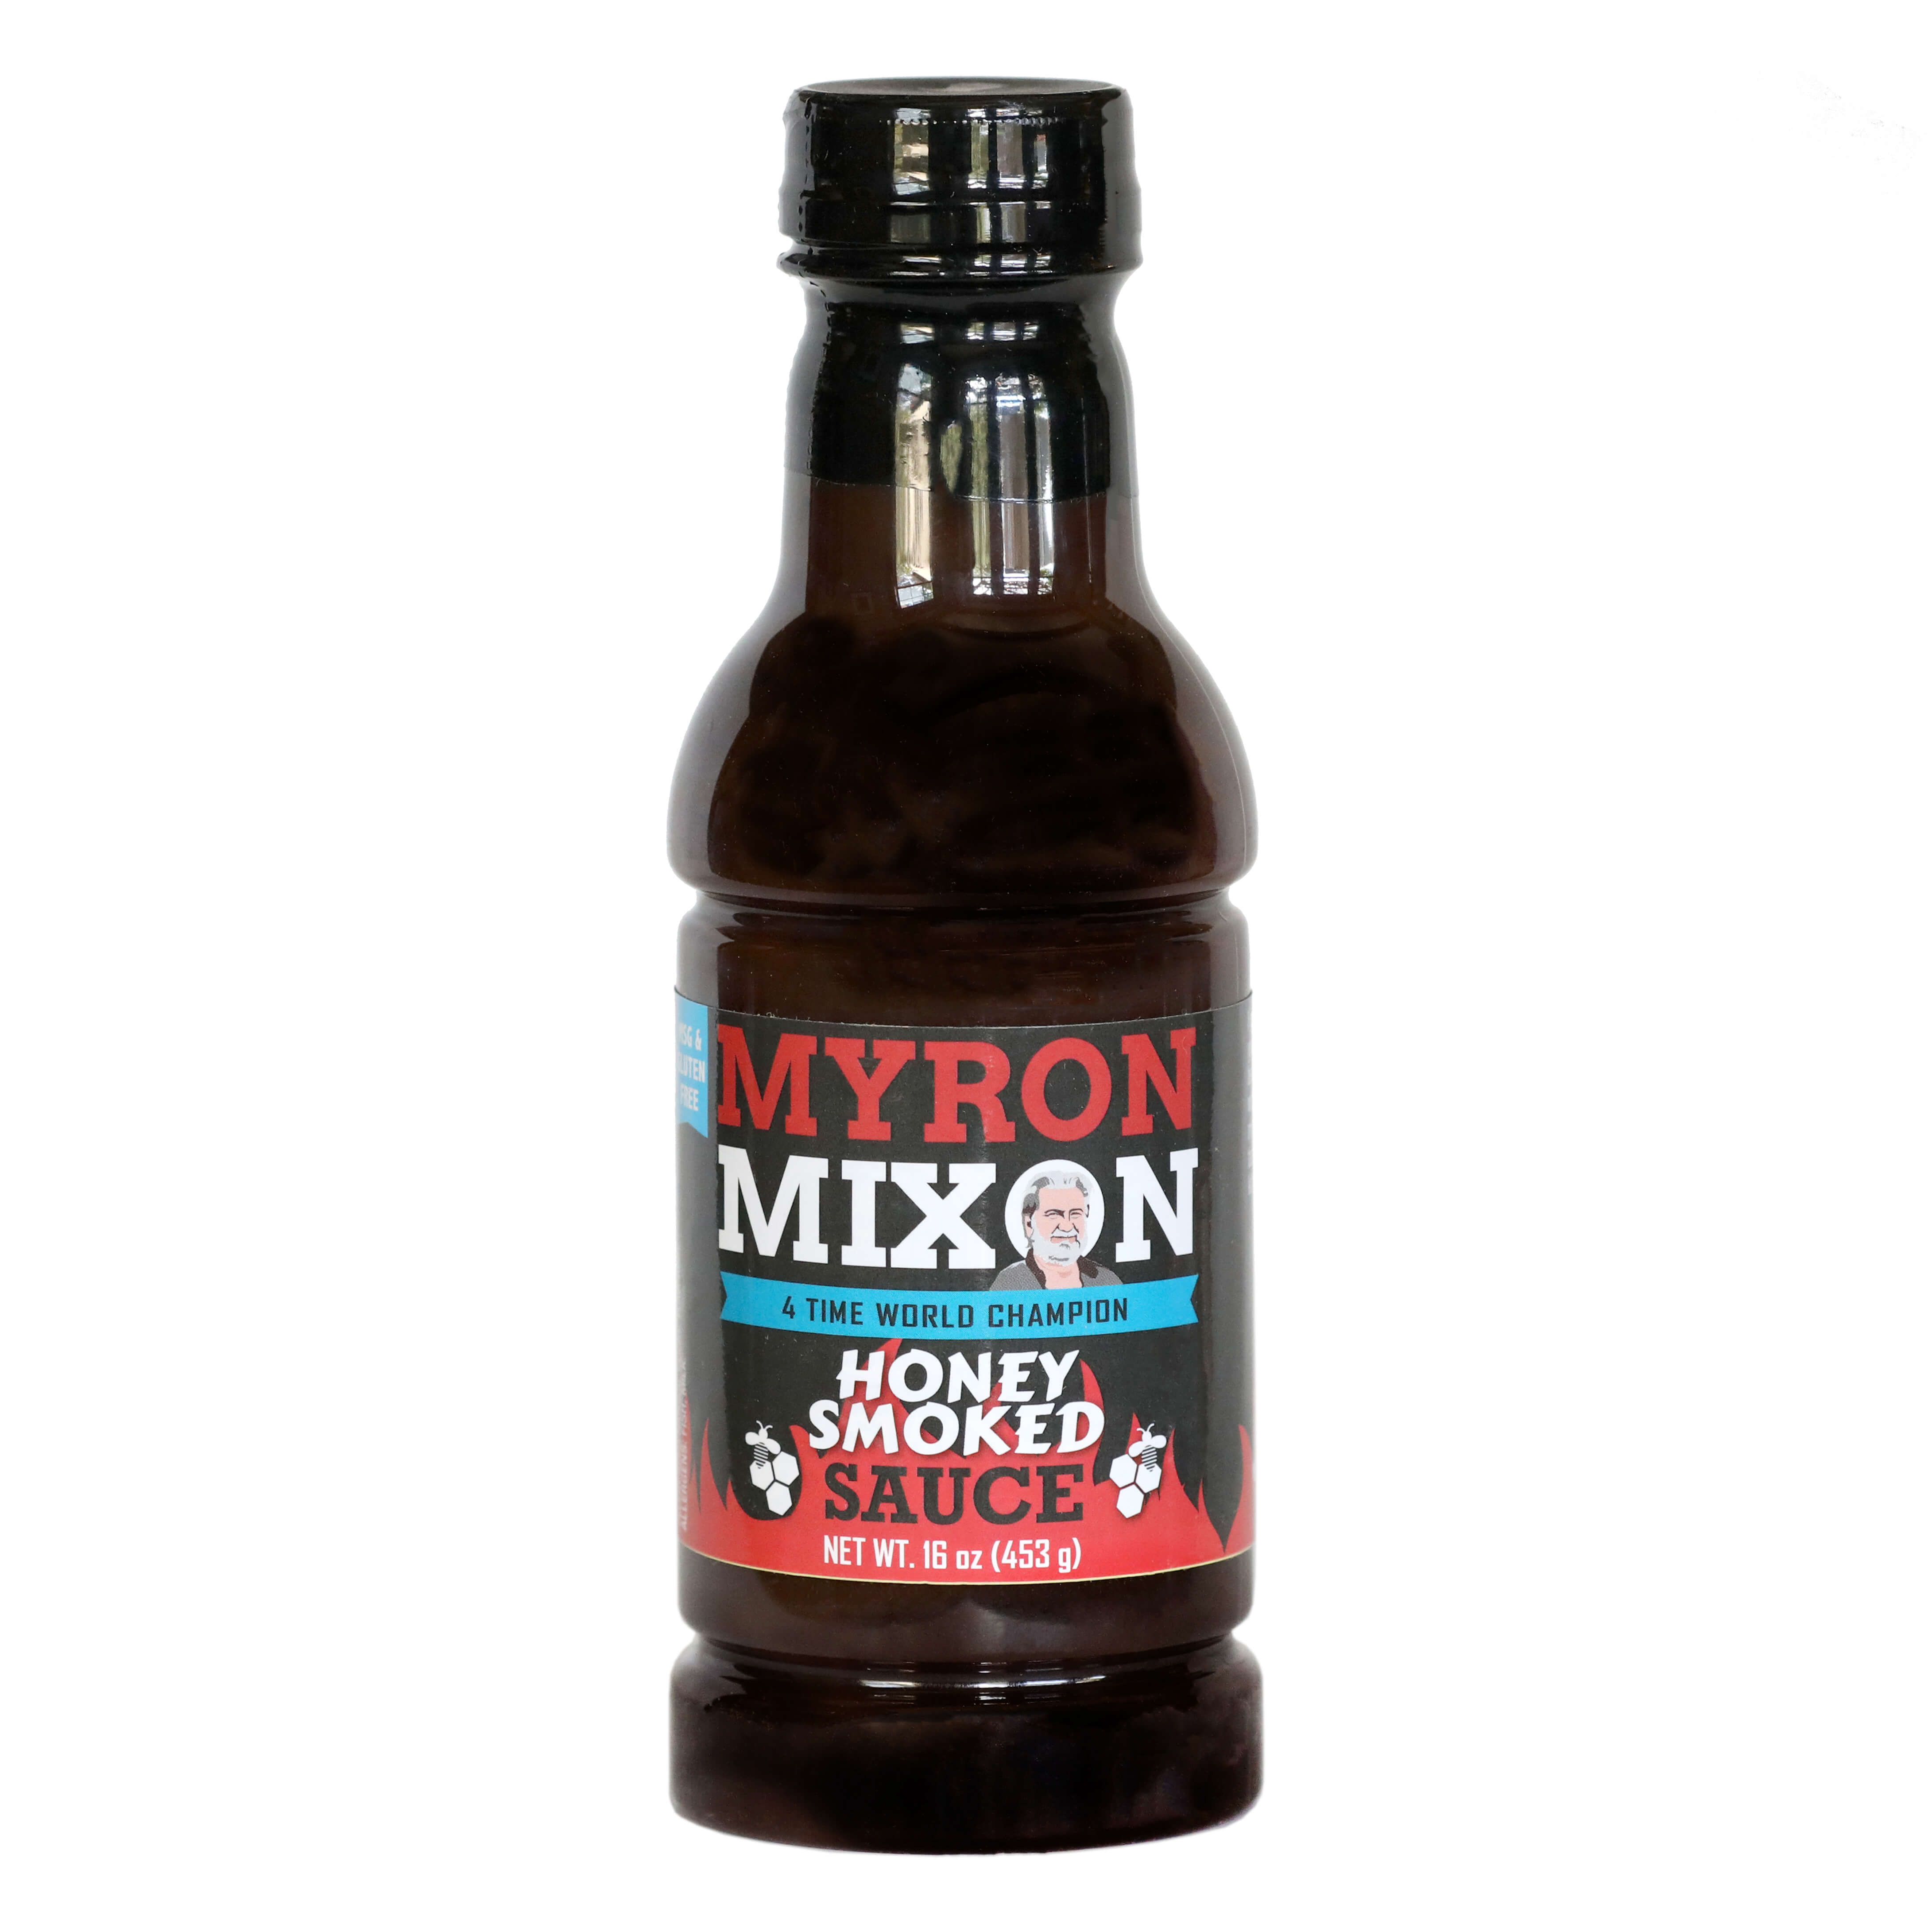 Myron Mixon Honey Smoked Sauce Just Grillin Outdoor Living